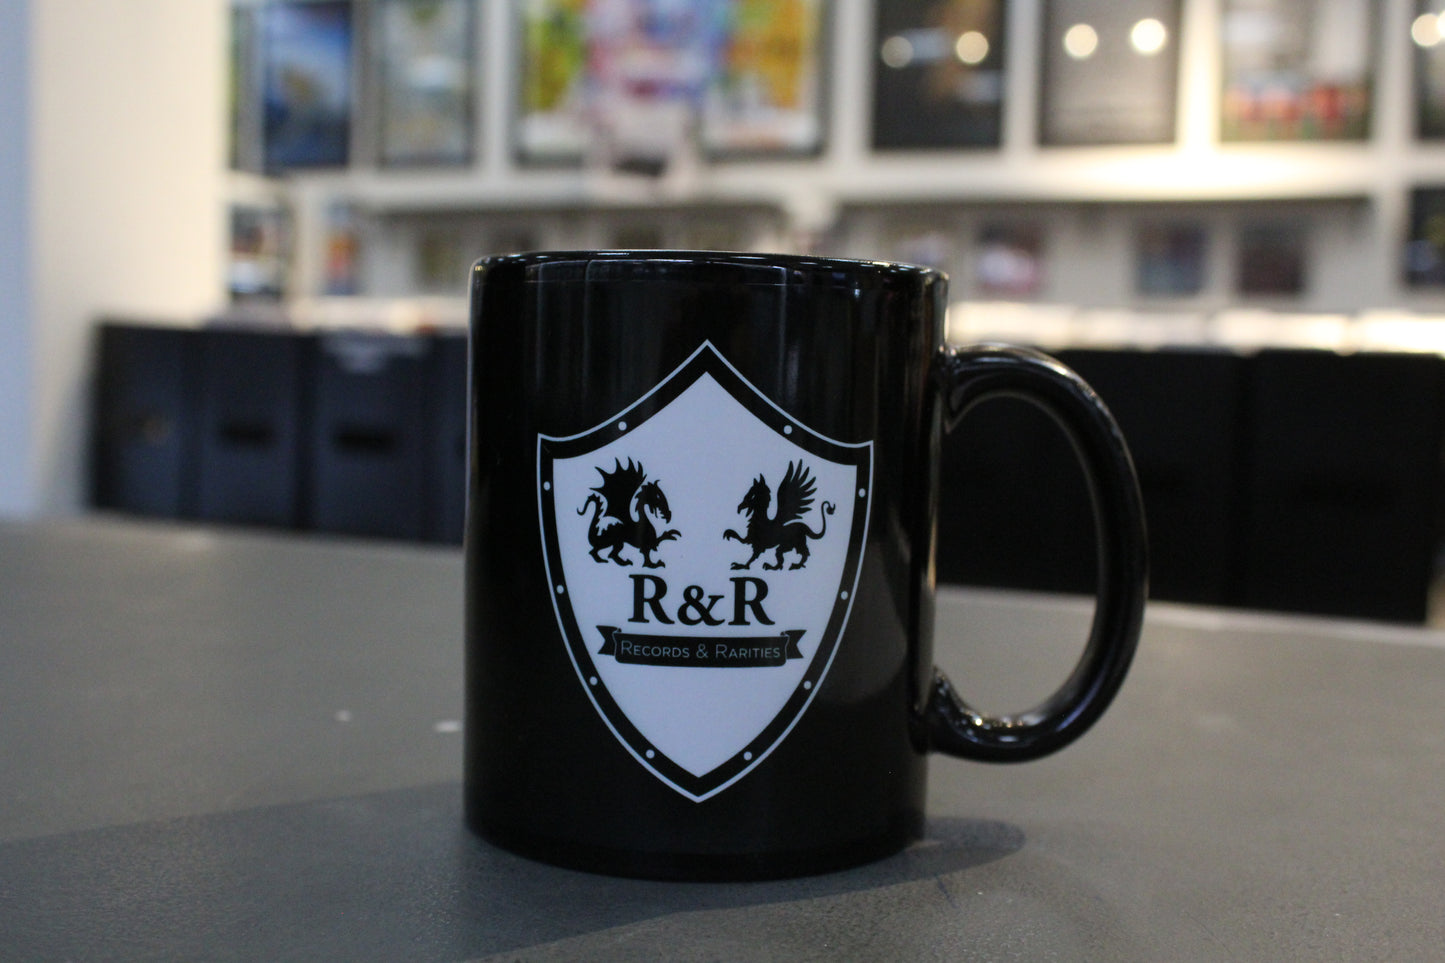 Records & Rarities Coffee Mug